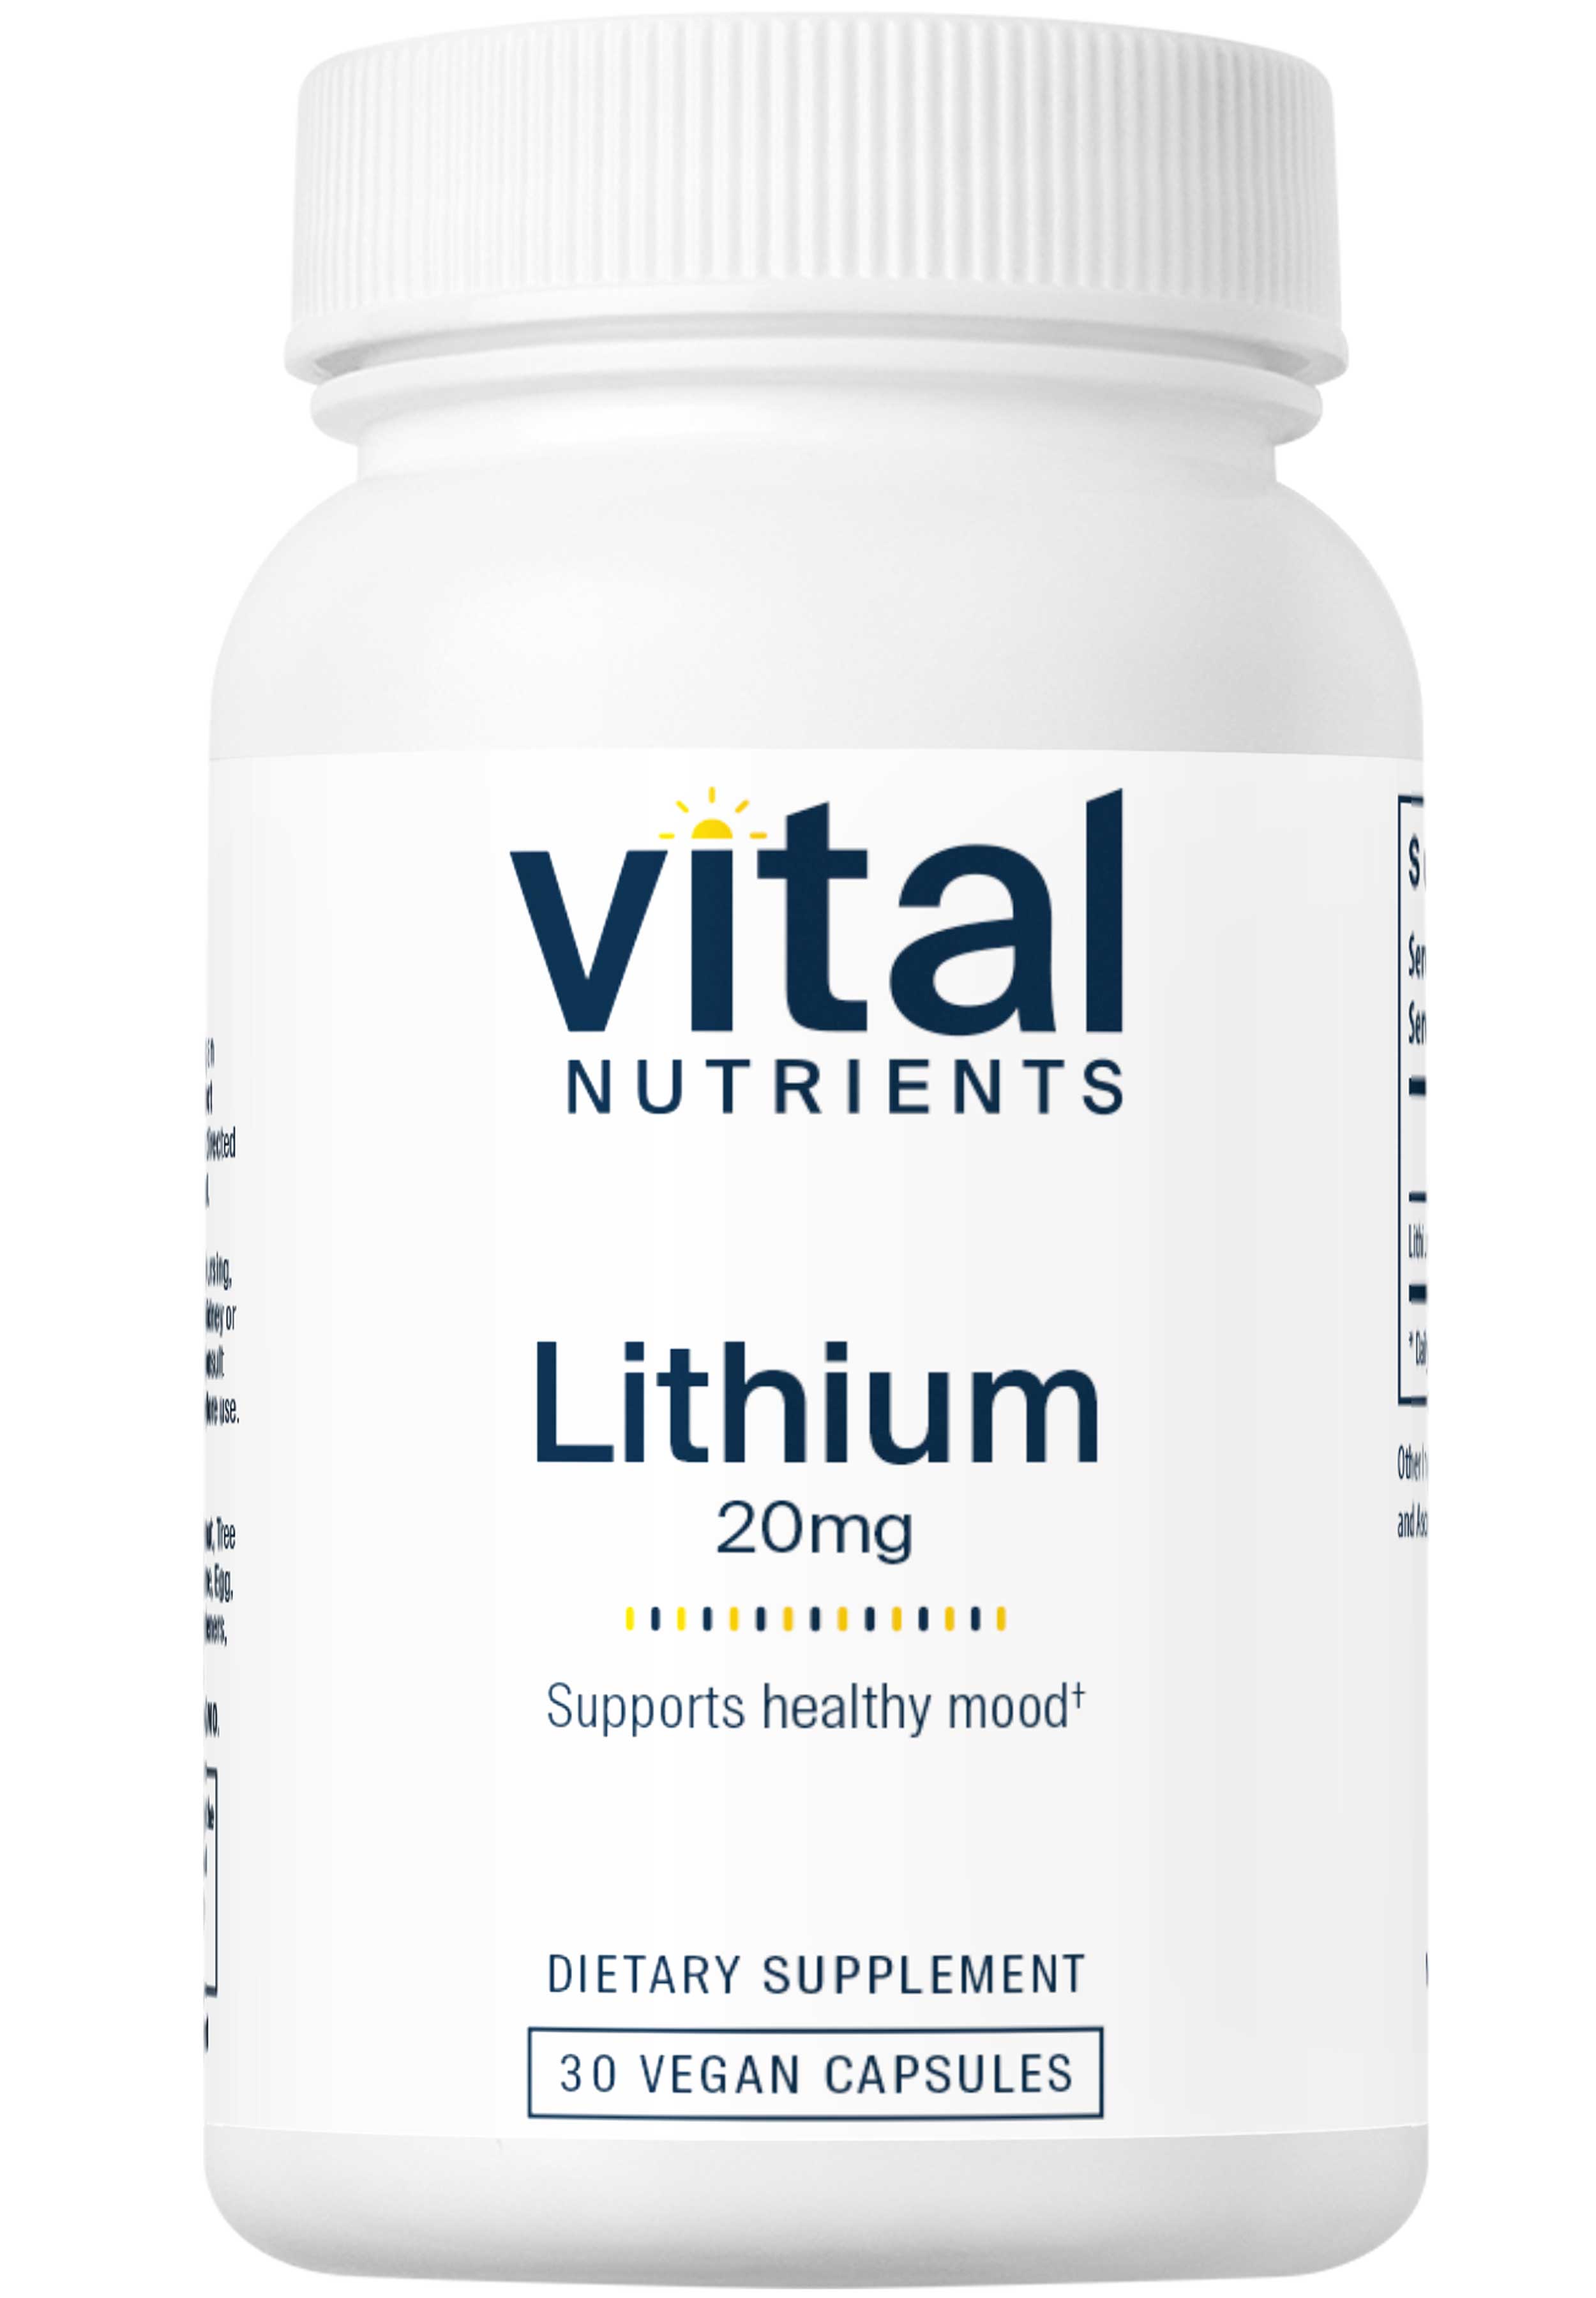 Vital Nutrients Lithium (orotate) 20mg